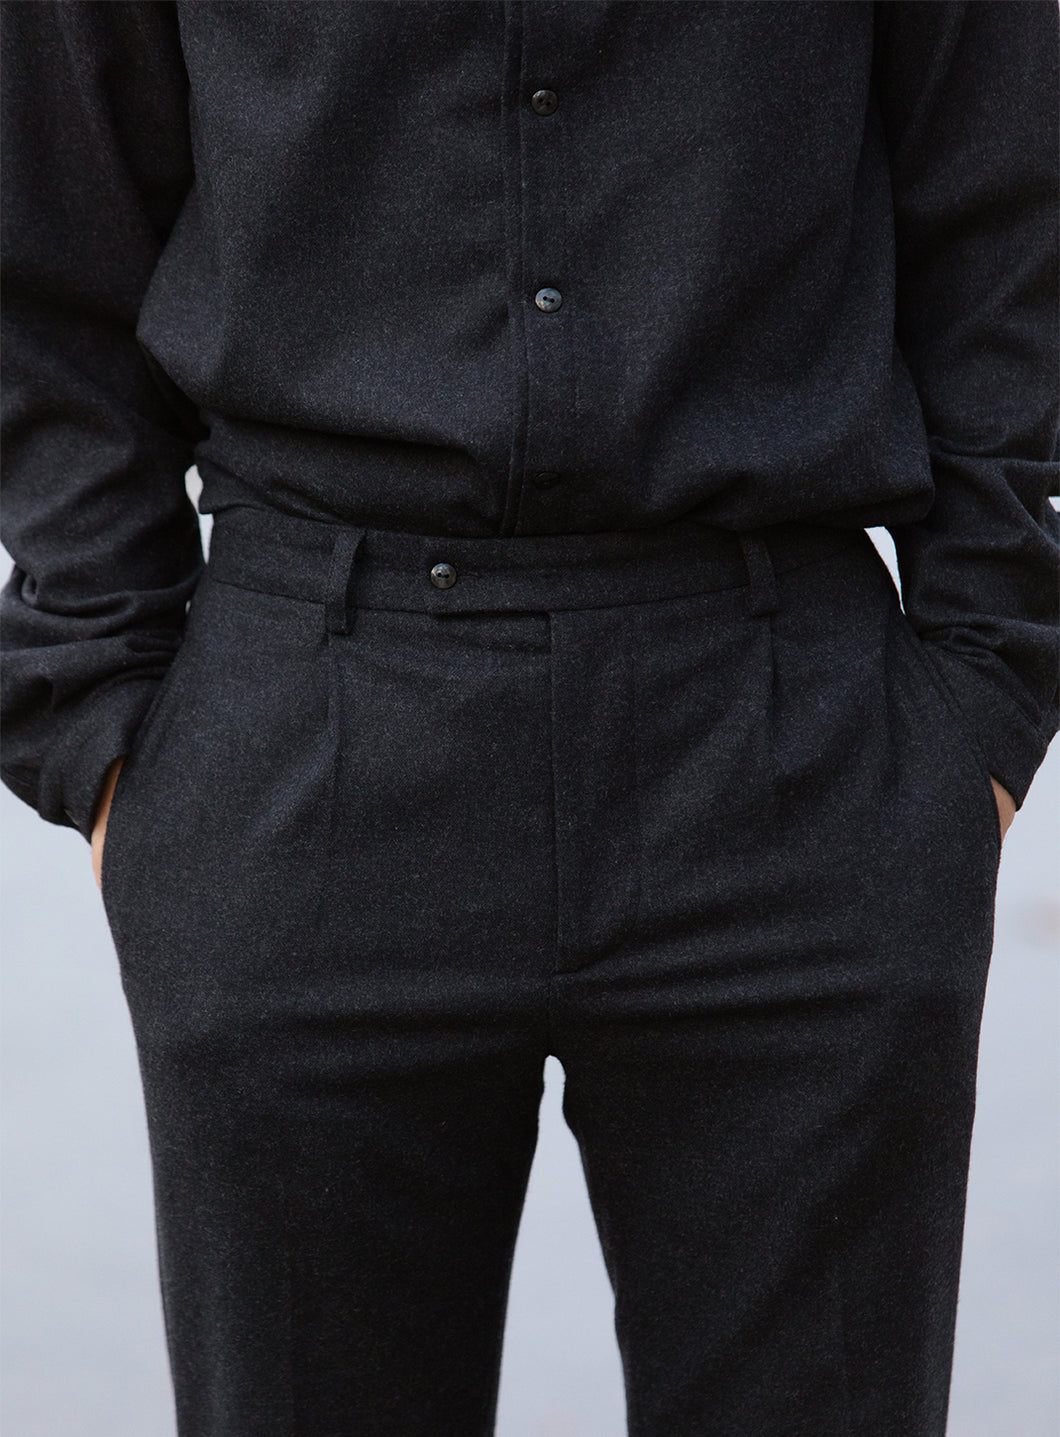 Pleated Pants with Belt Loops in Heather Dark Grey Flannel Wool